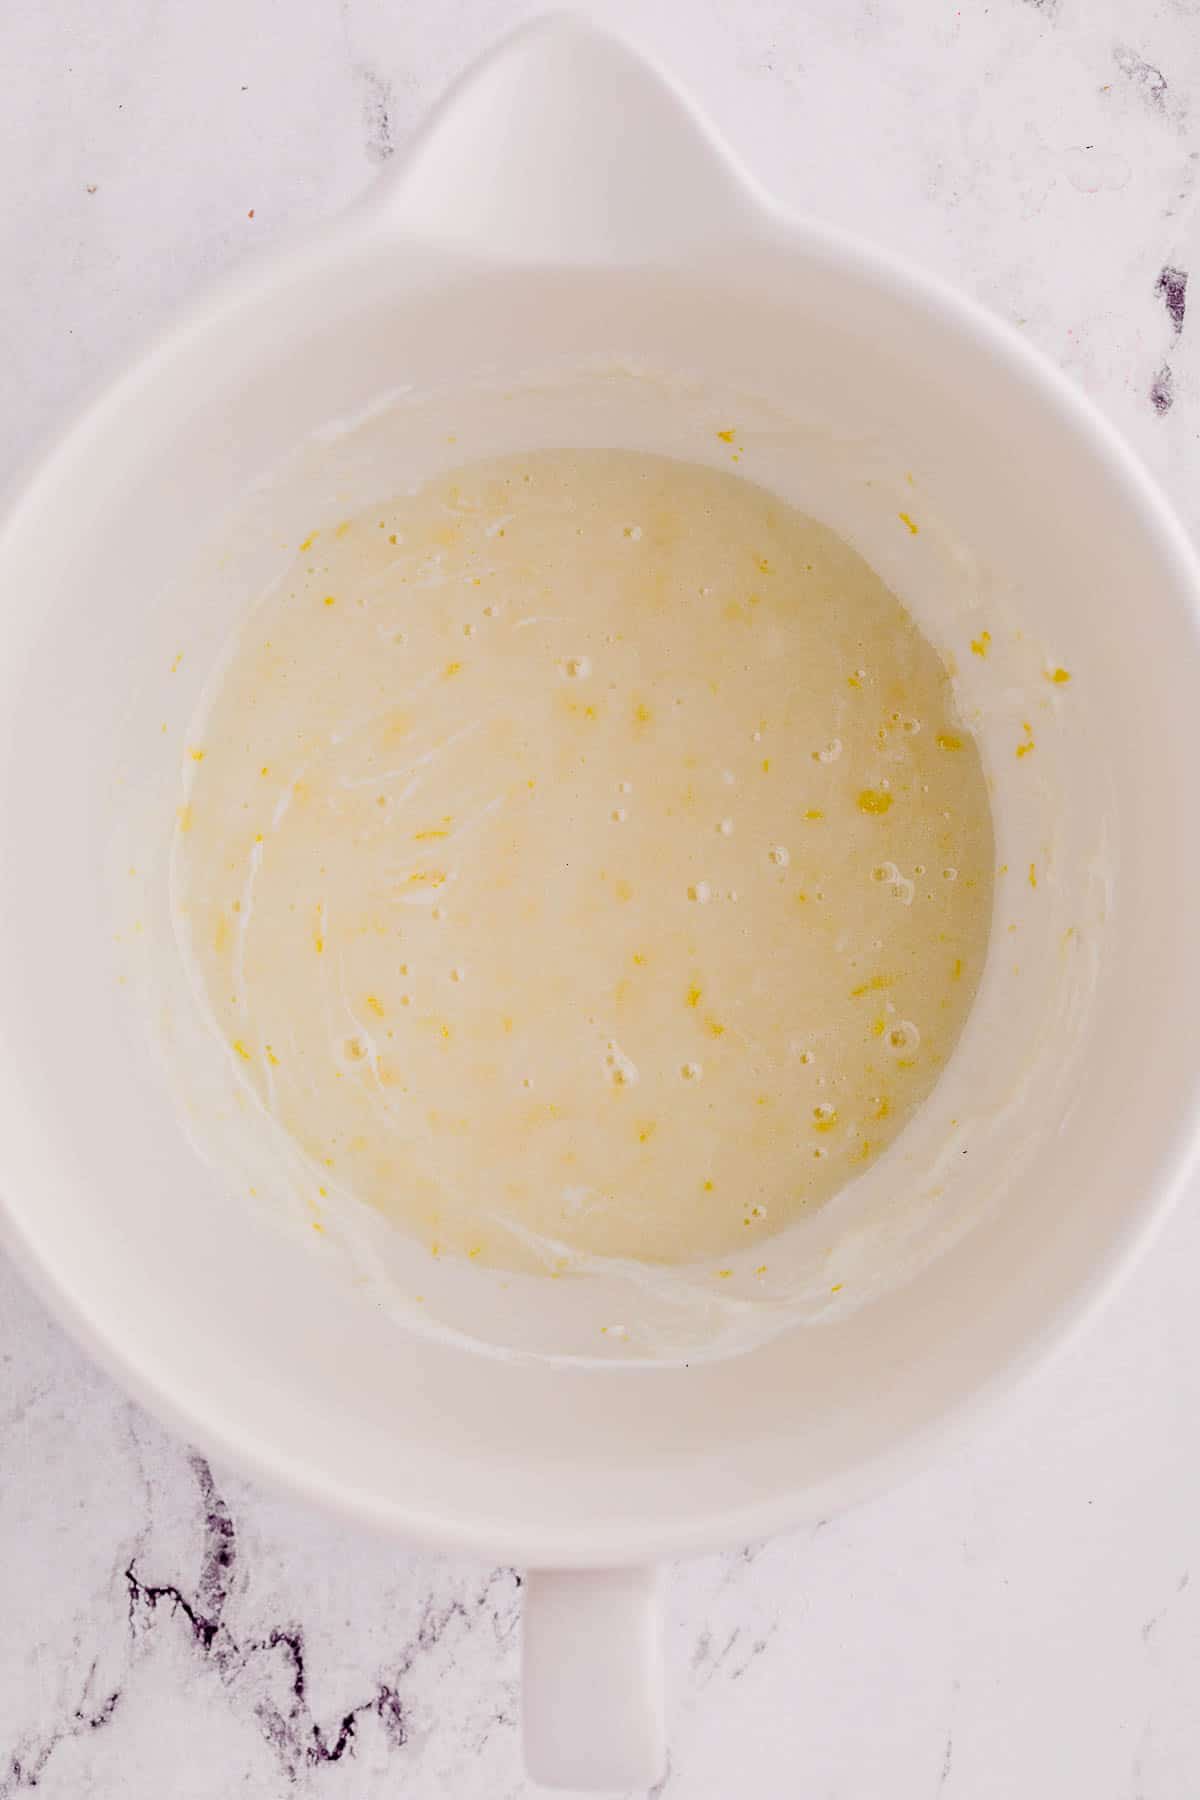 greek yogurt, lemon juice and vanilla extract whisked into egg, oil and sugar mixture